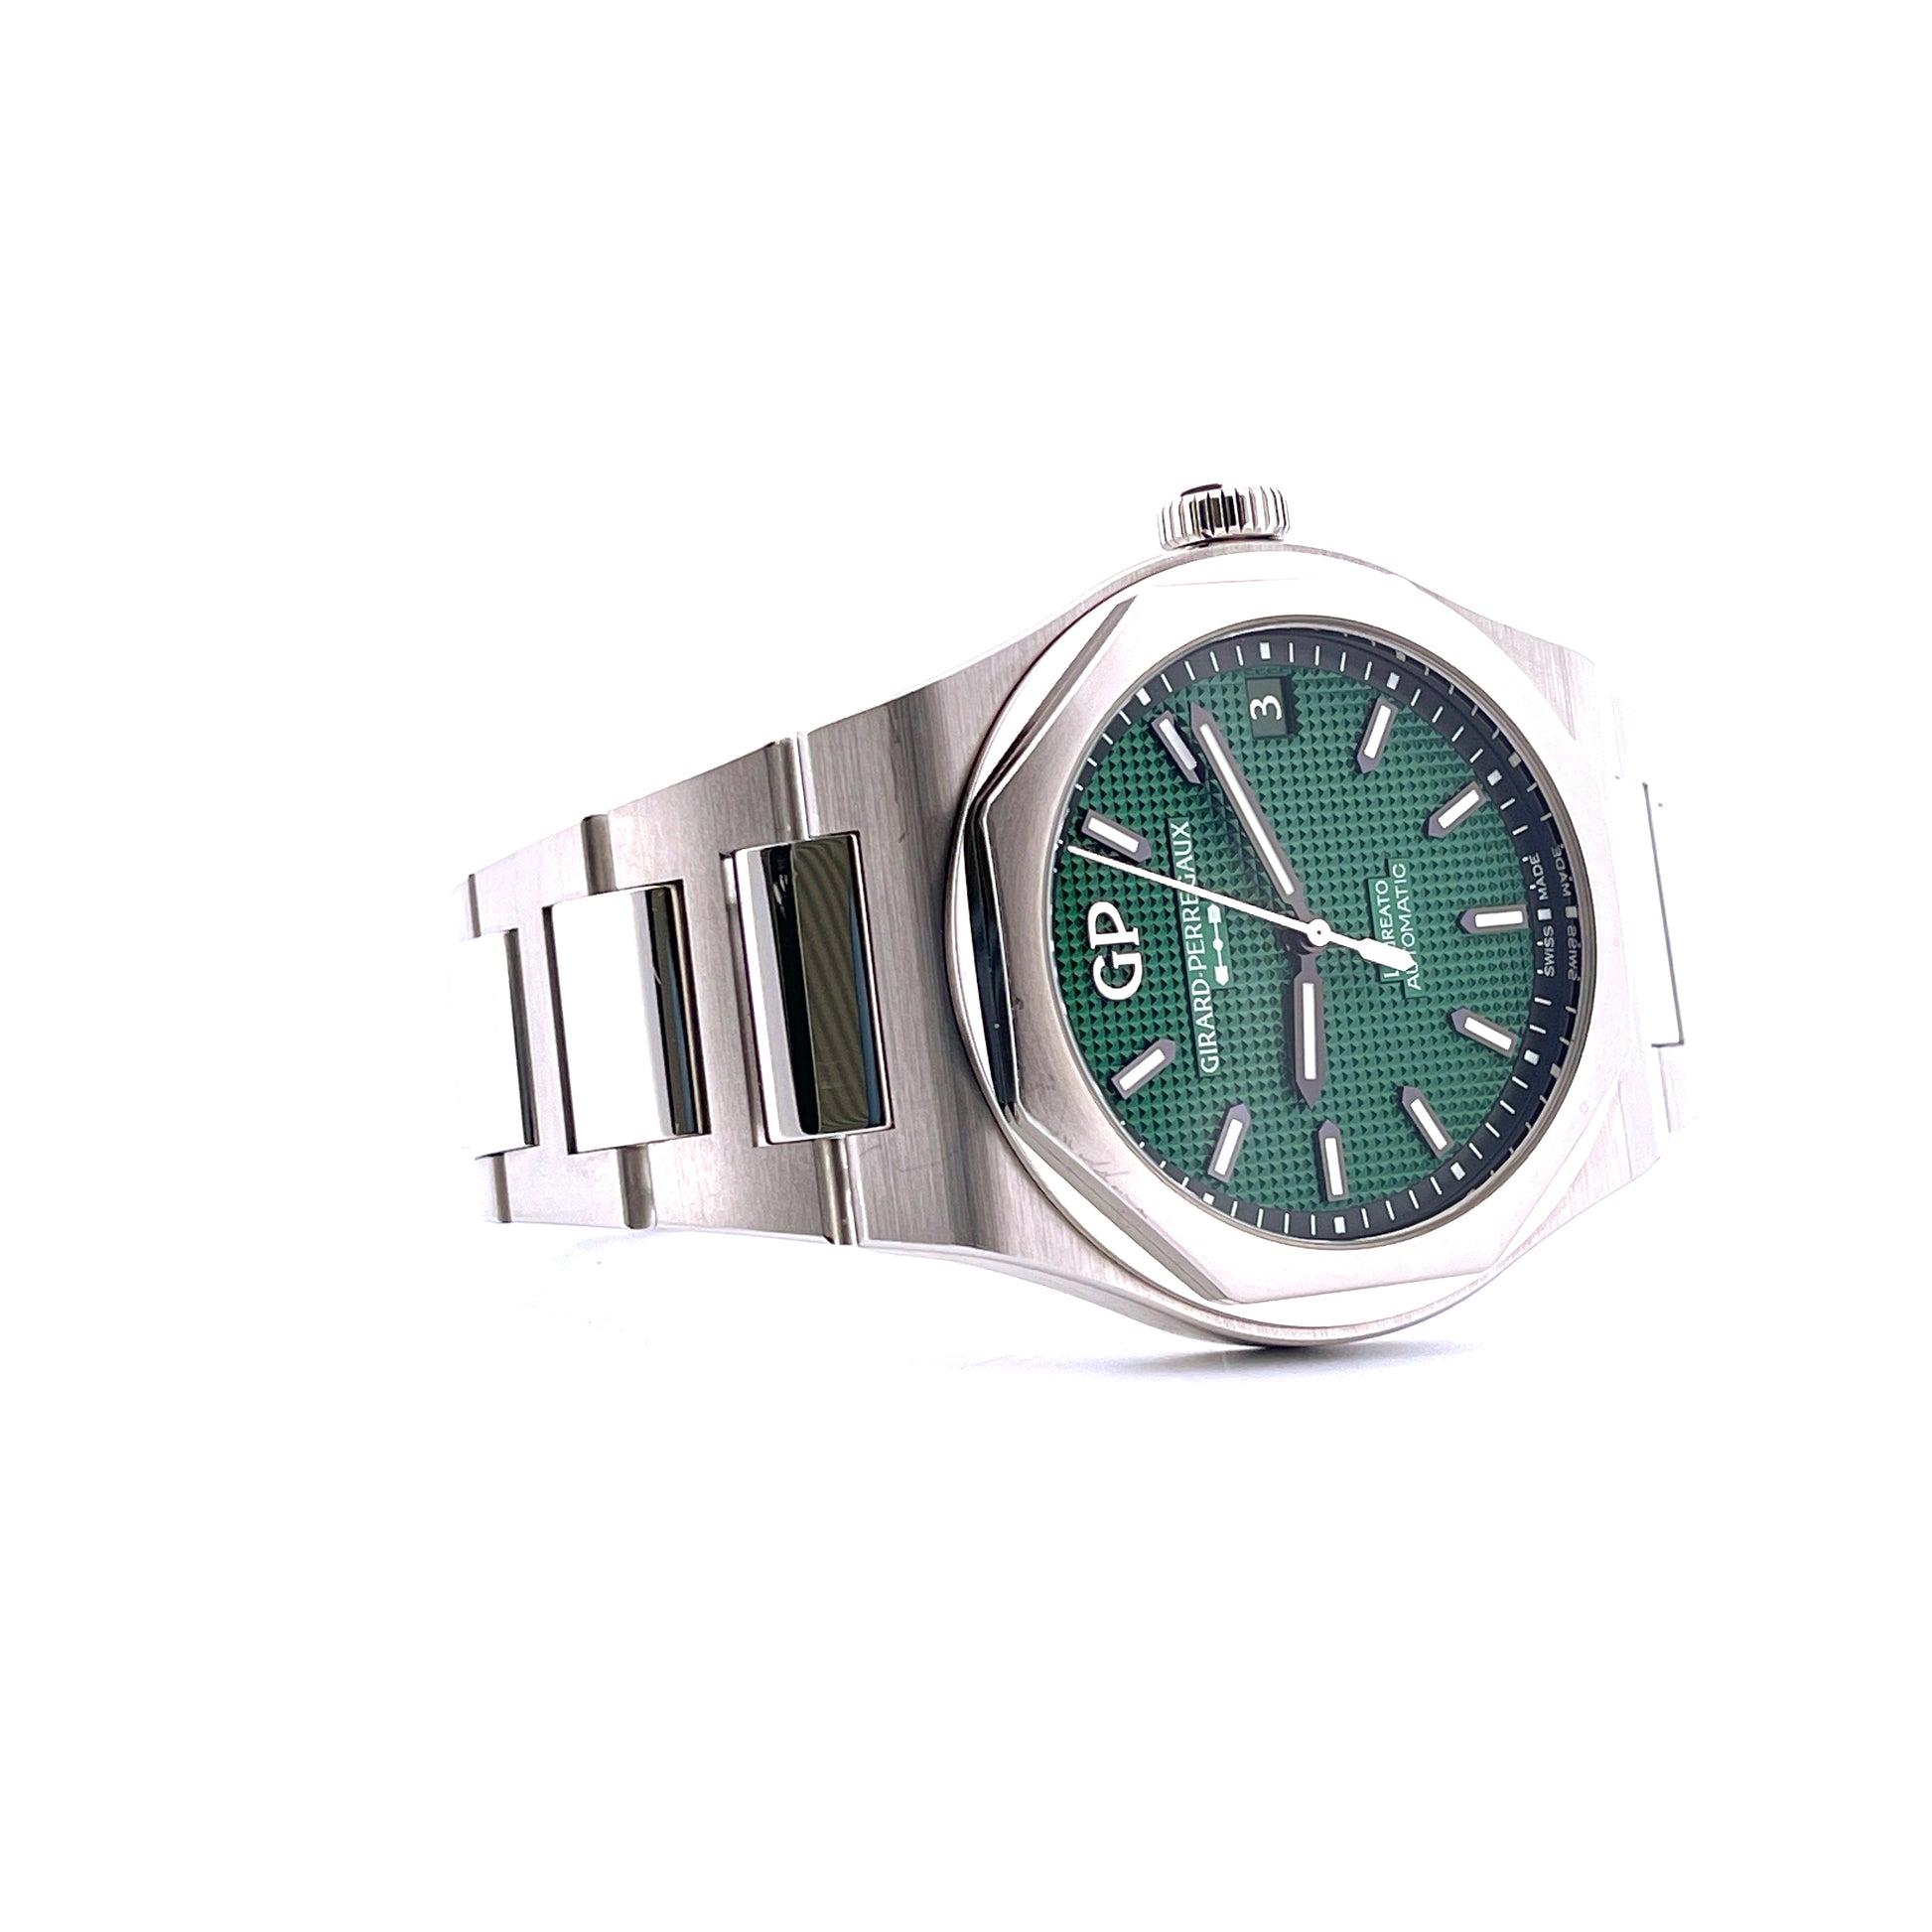 Girard Perregaux - Laureato Green 42mm - Juwelier Spliedt